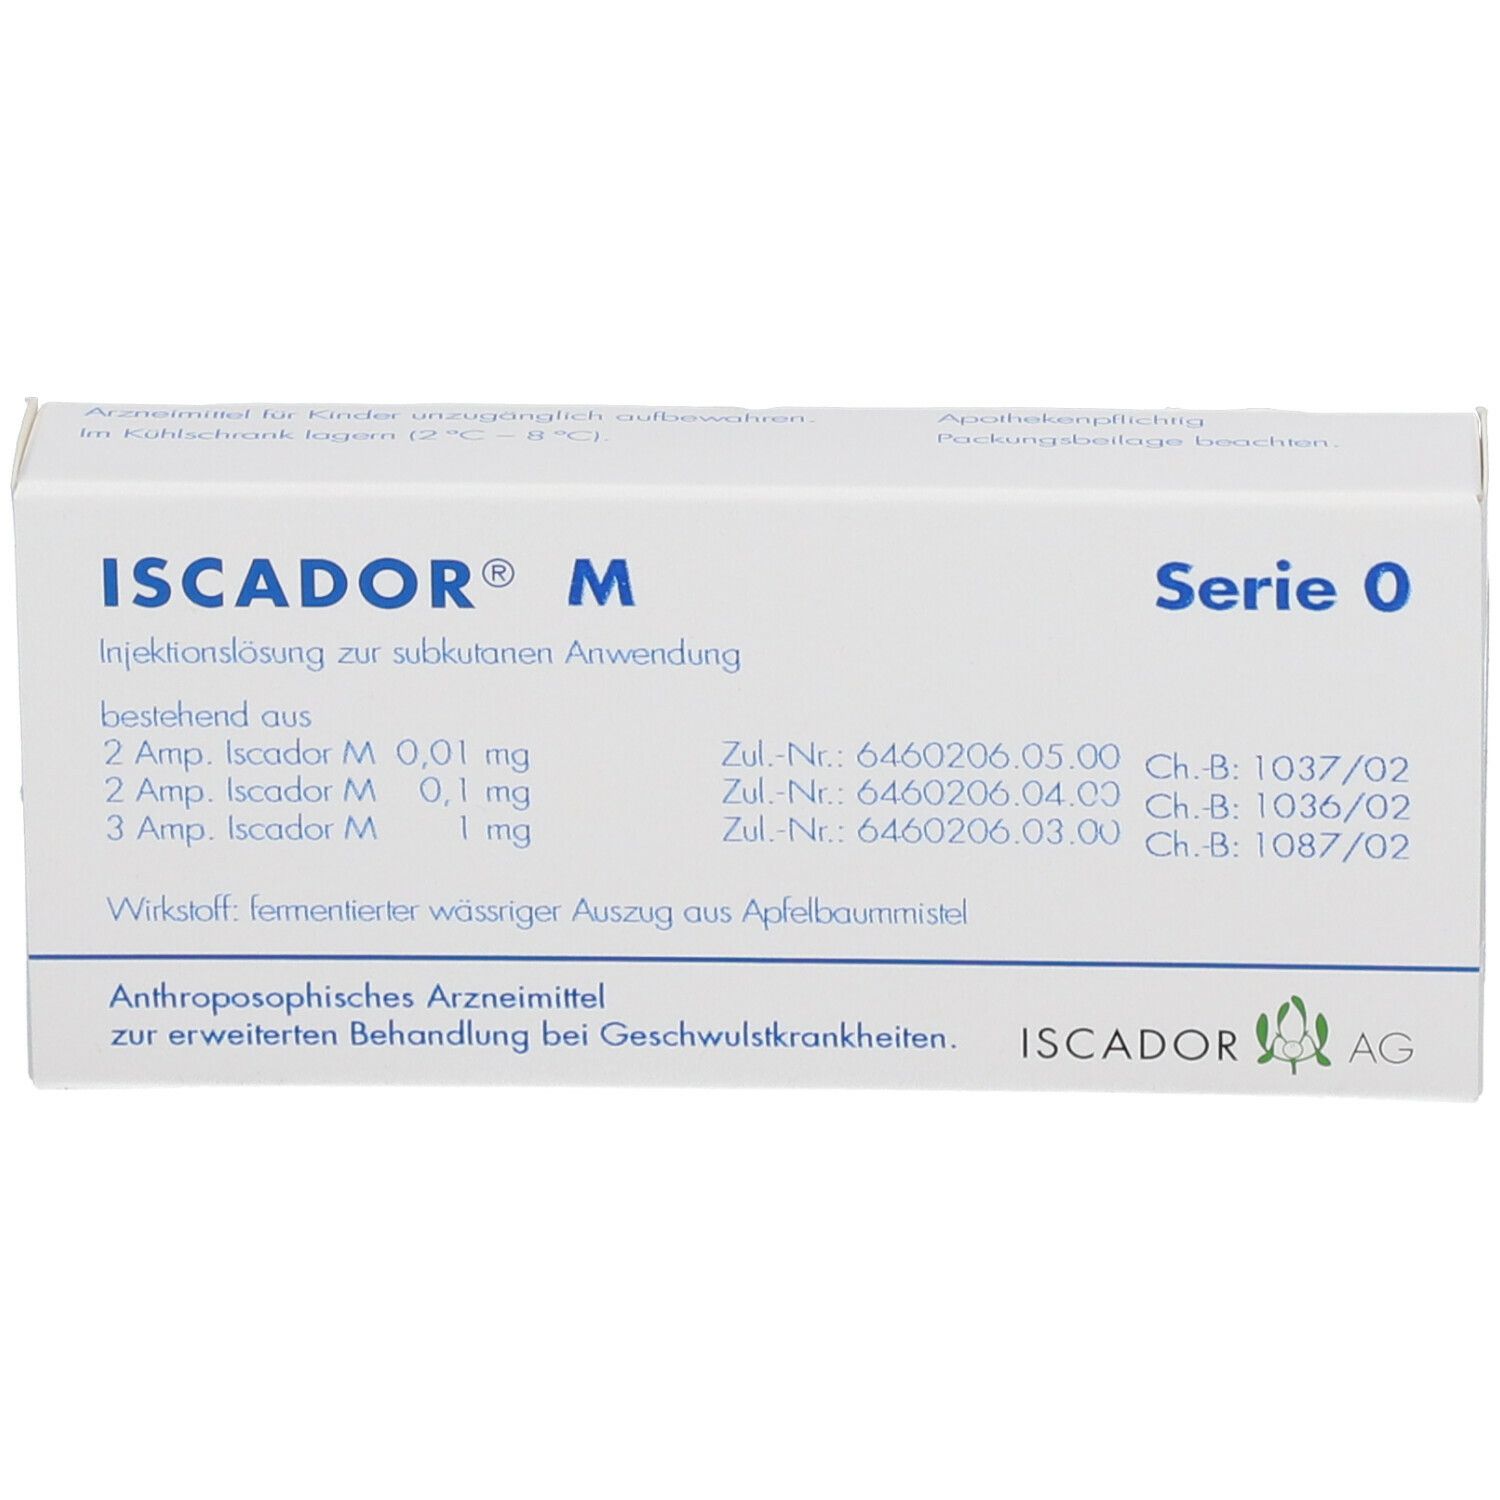 ISCADOR® M Serie 0